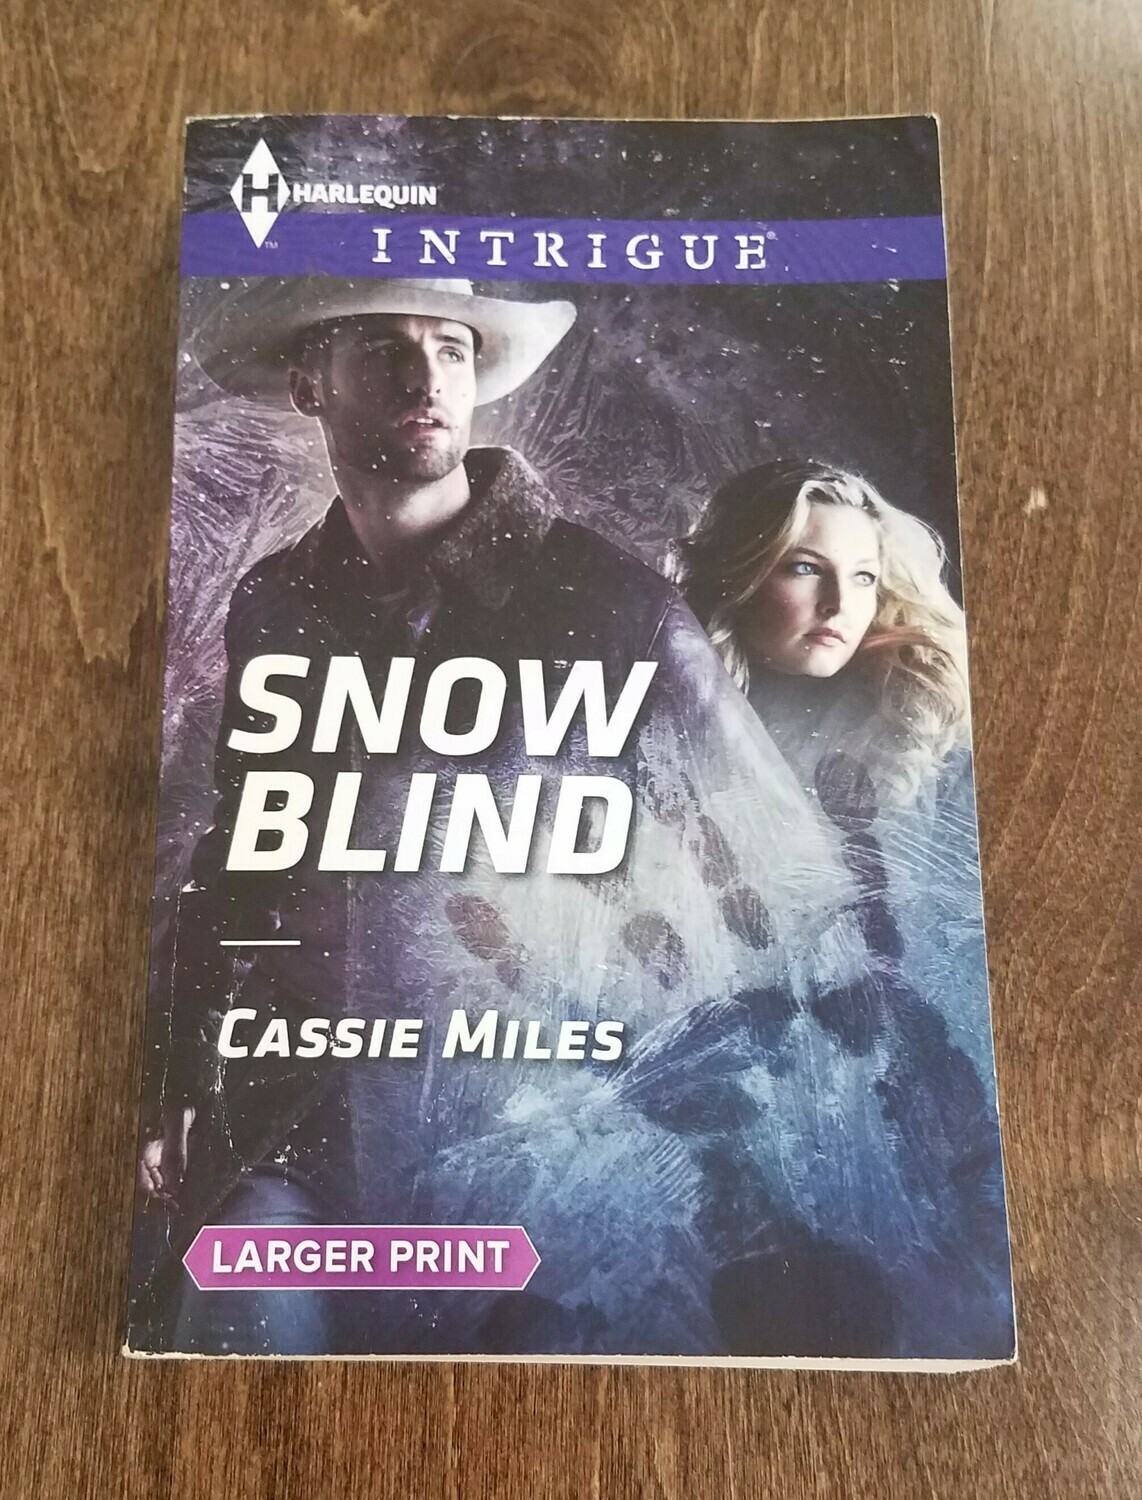 Snow Blind by Cassie Miles